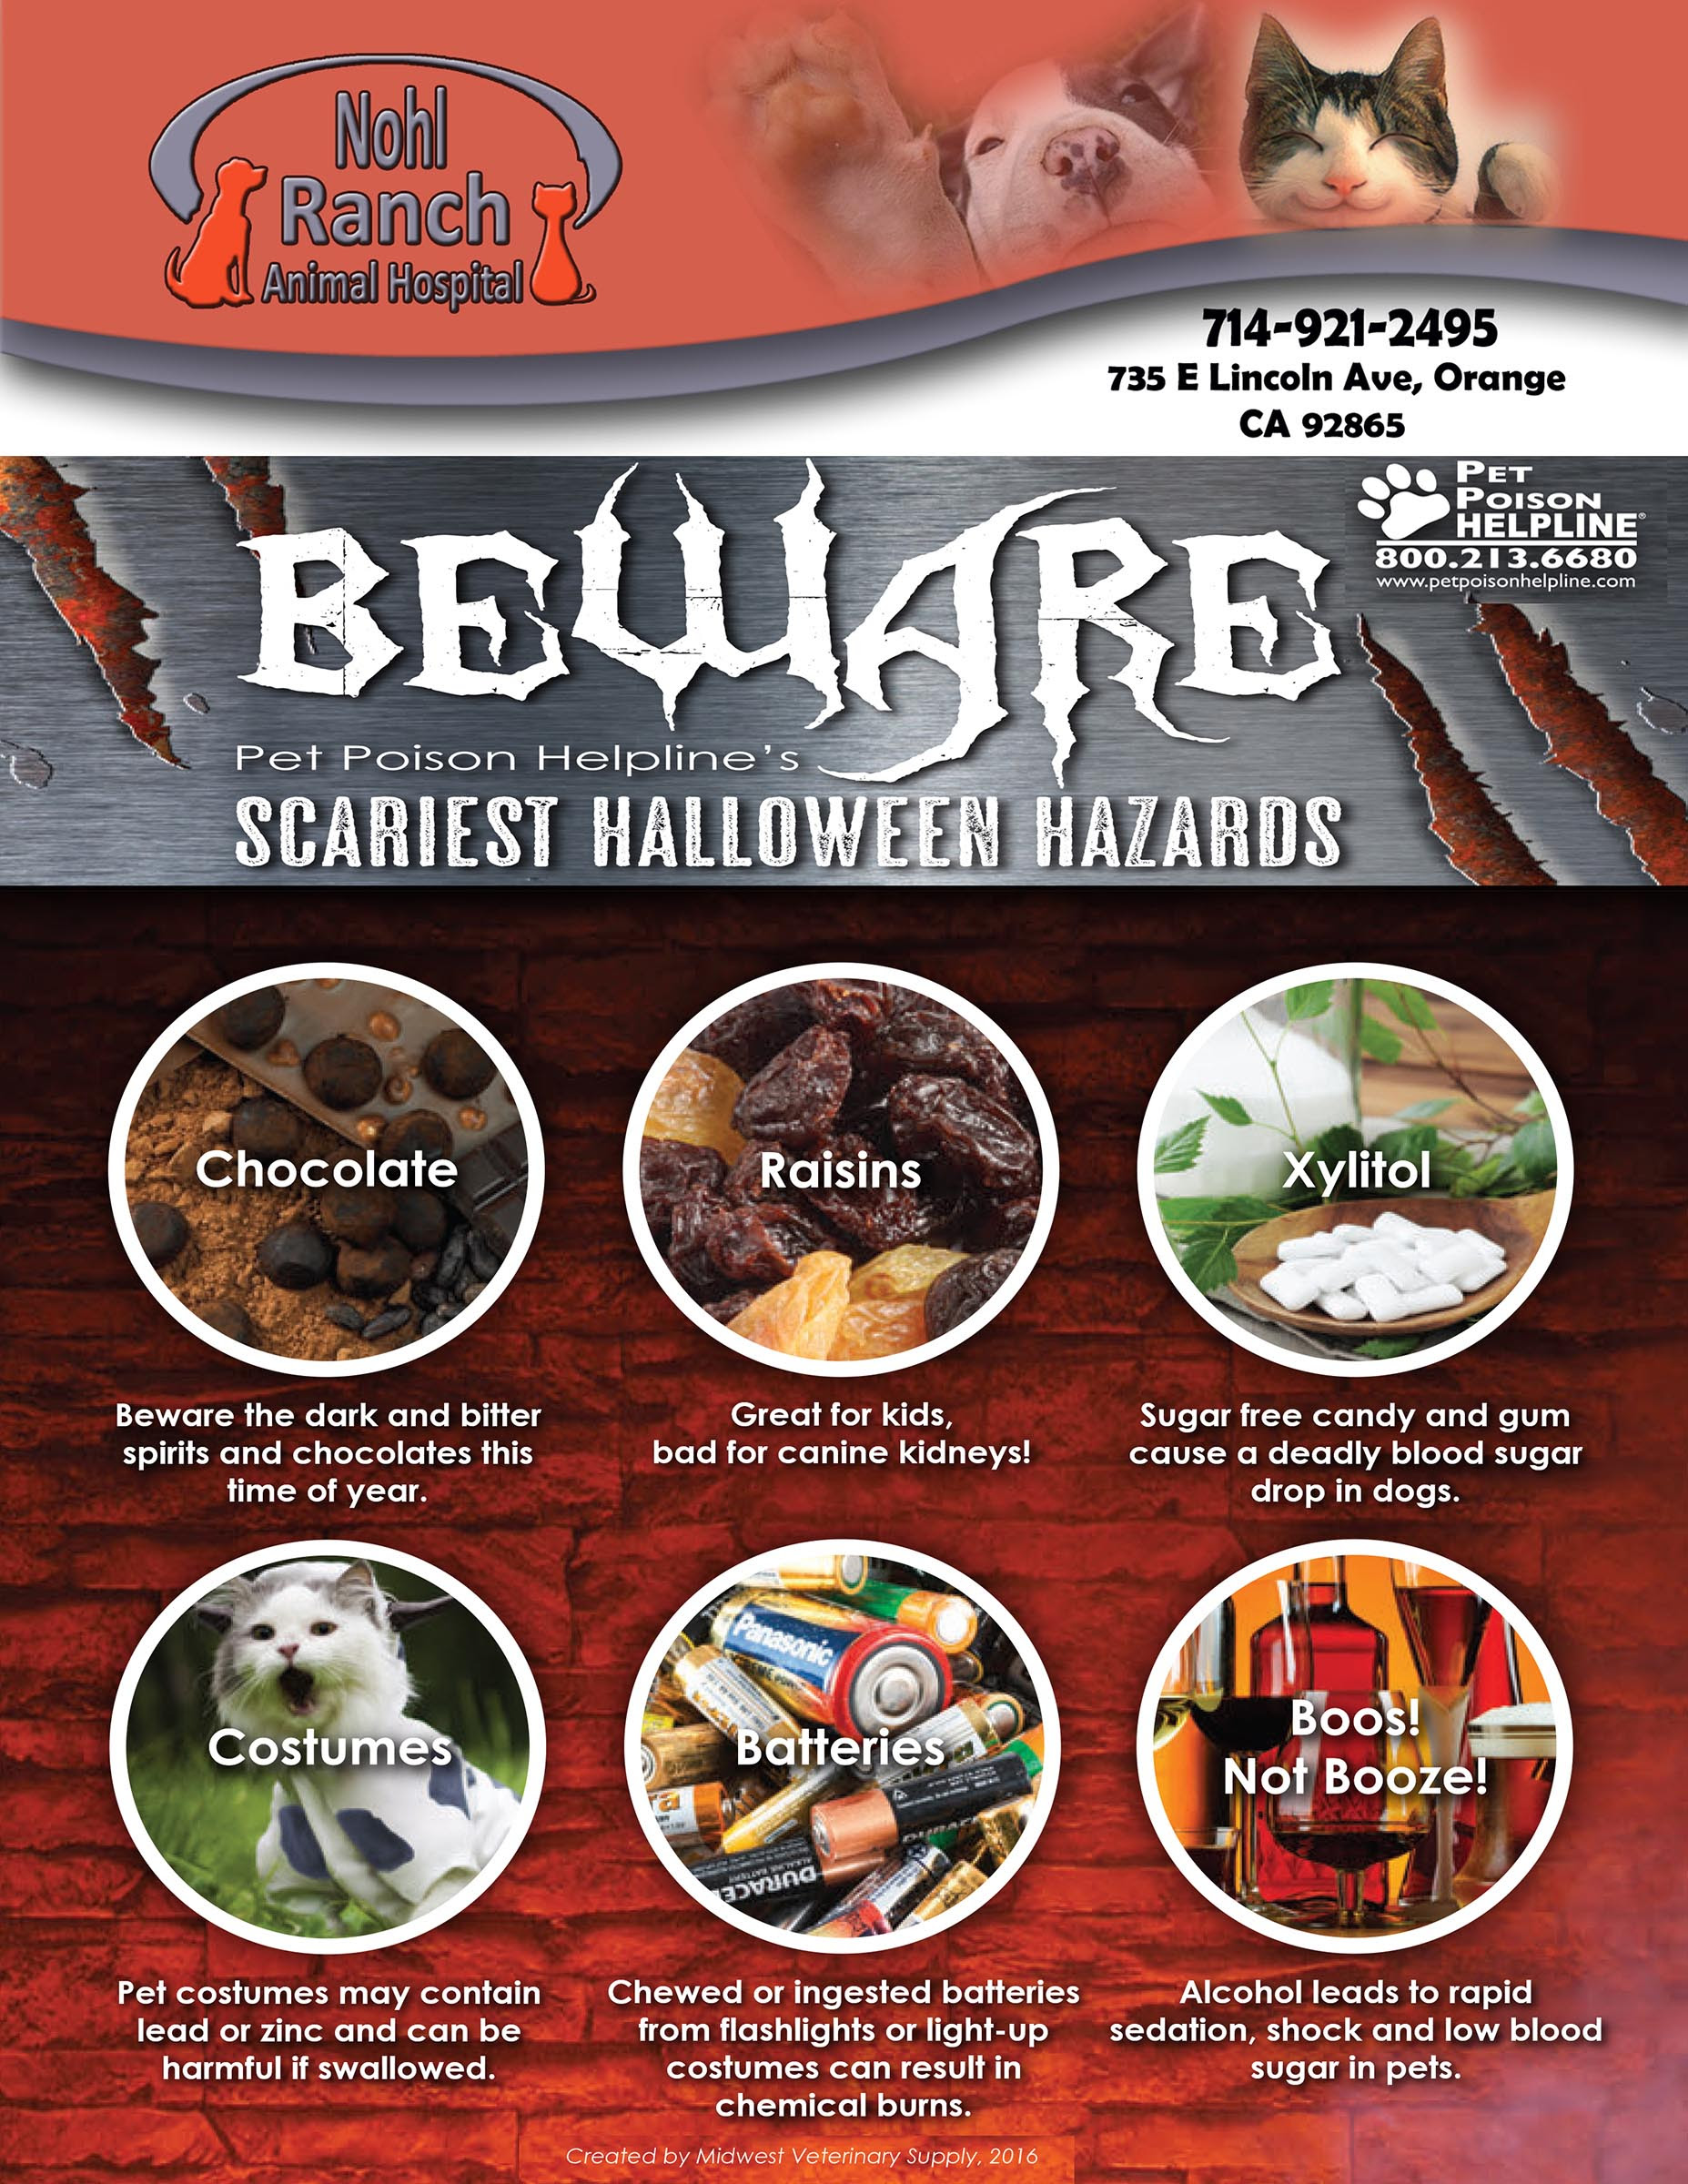 Beware pet poison helpline scariest Halloween hazards